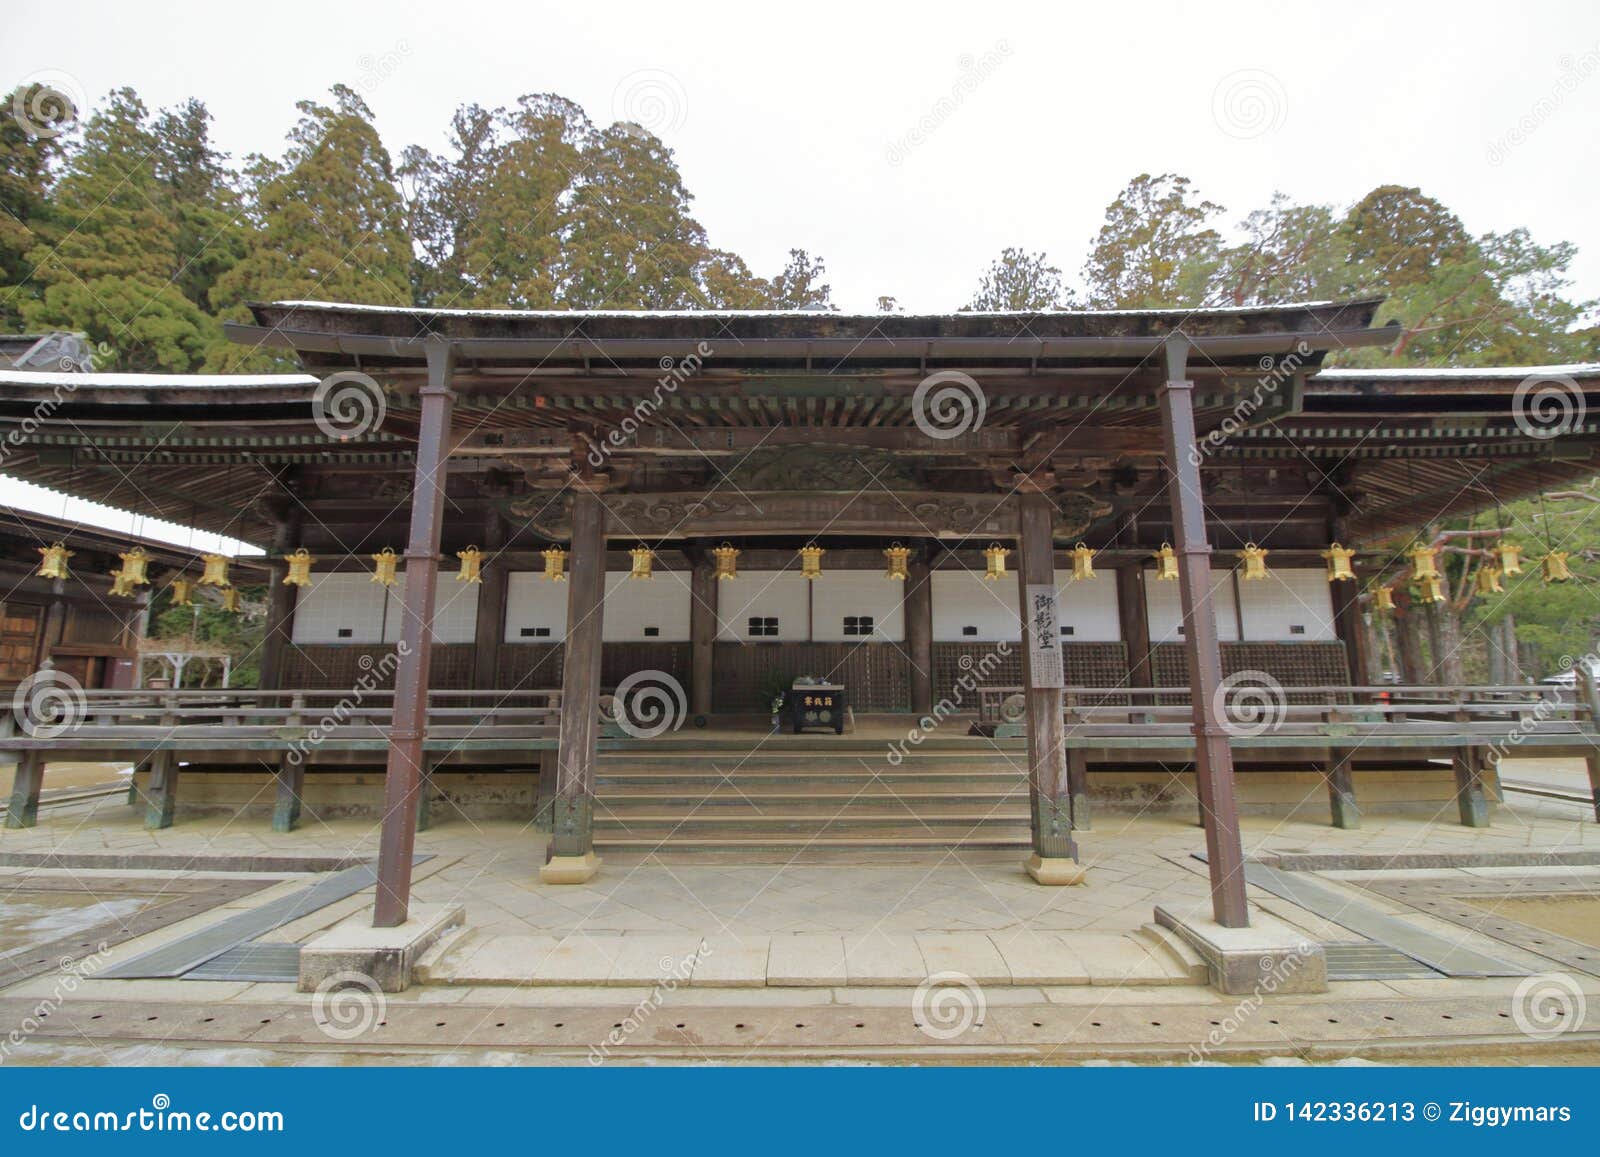 great portrait hall at danjo garan sacred temple complex, koyasan